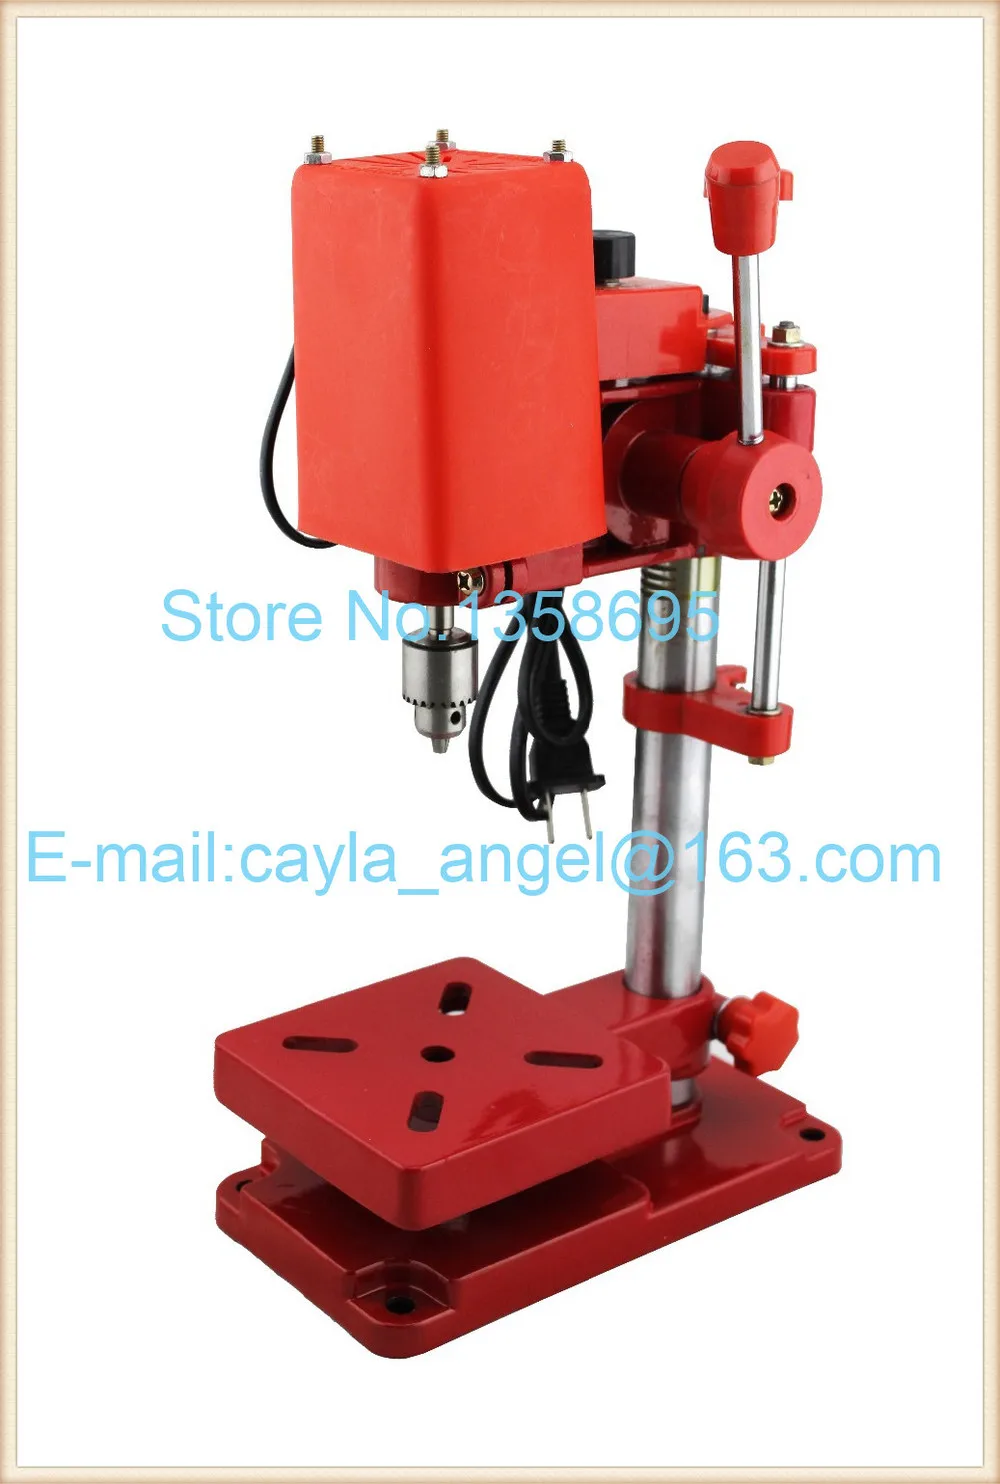 Wholesale Special Micro High Precision Drilling Machine,Vertical Drilling Machine,Digital Controlled Small Drilling Machine